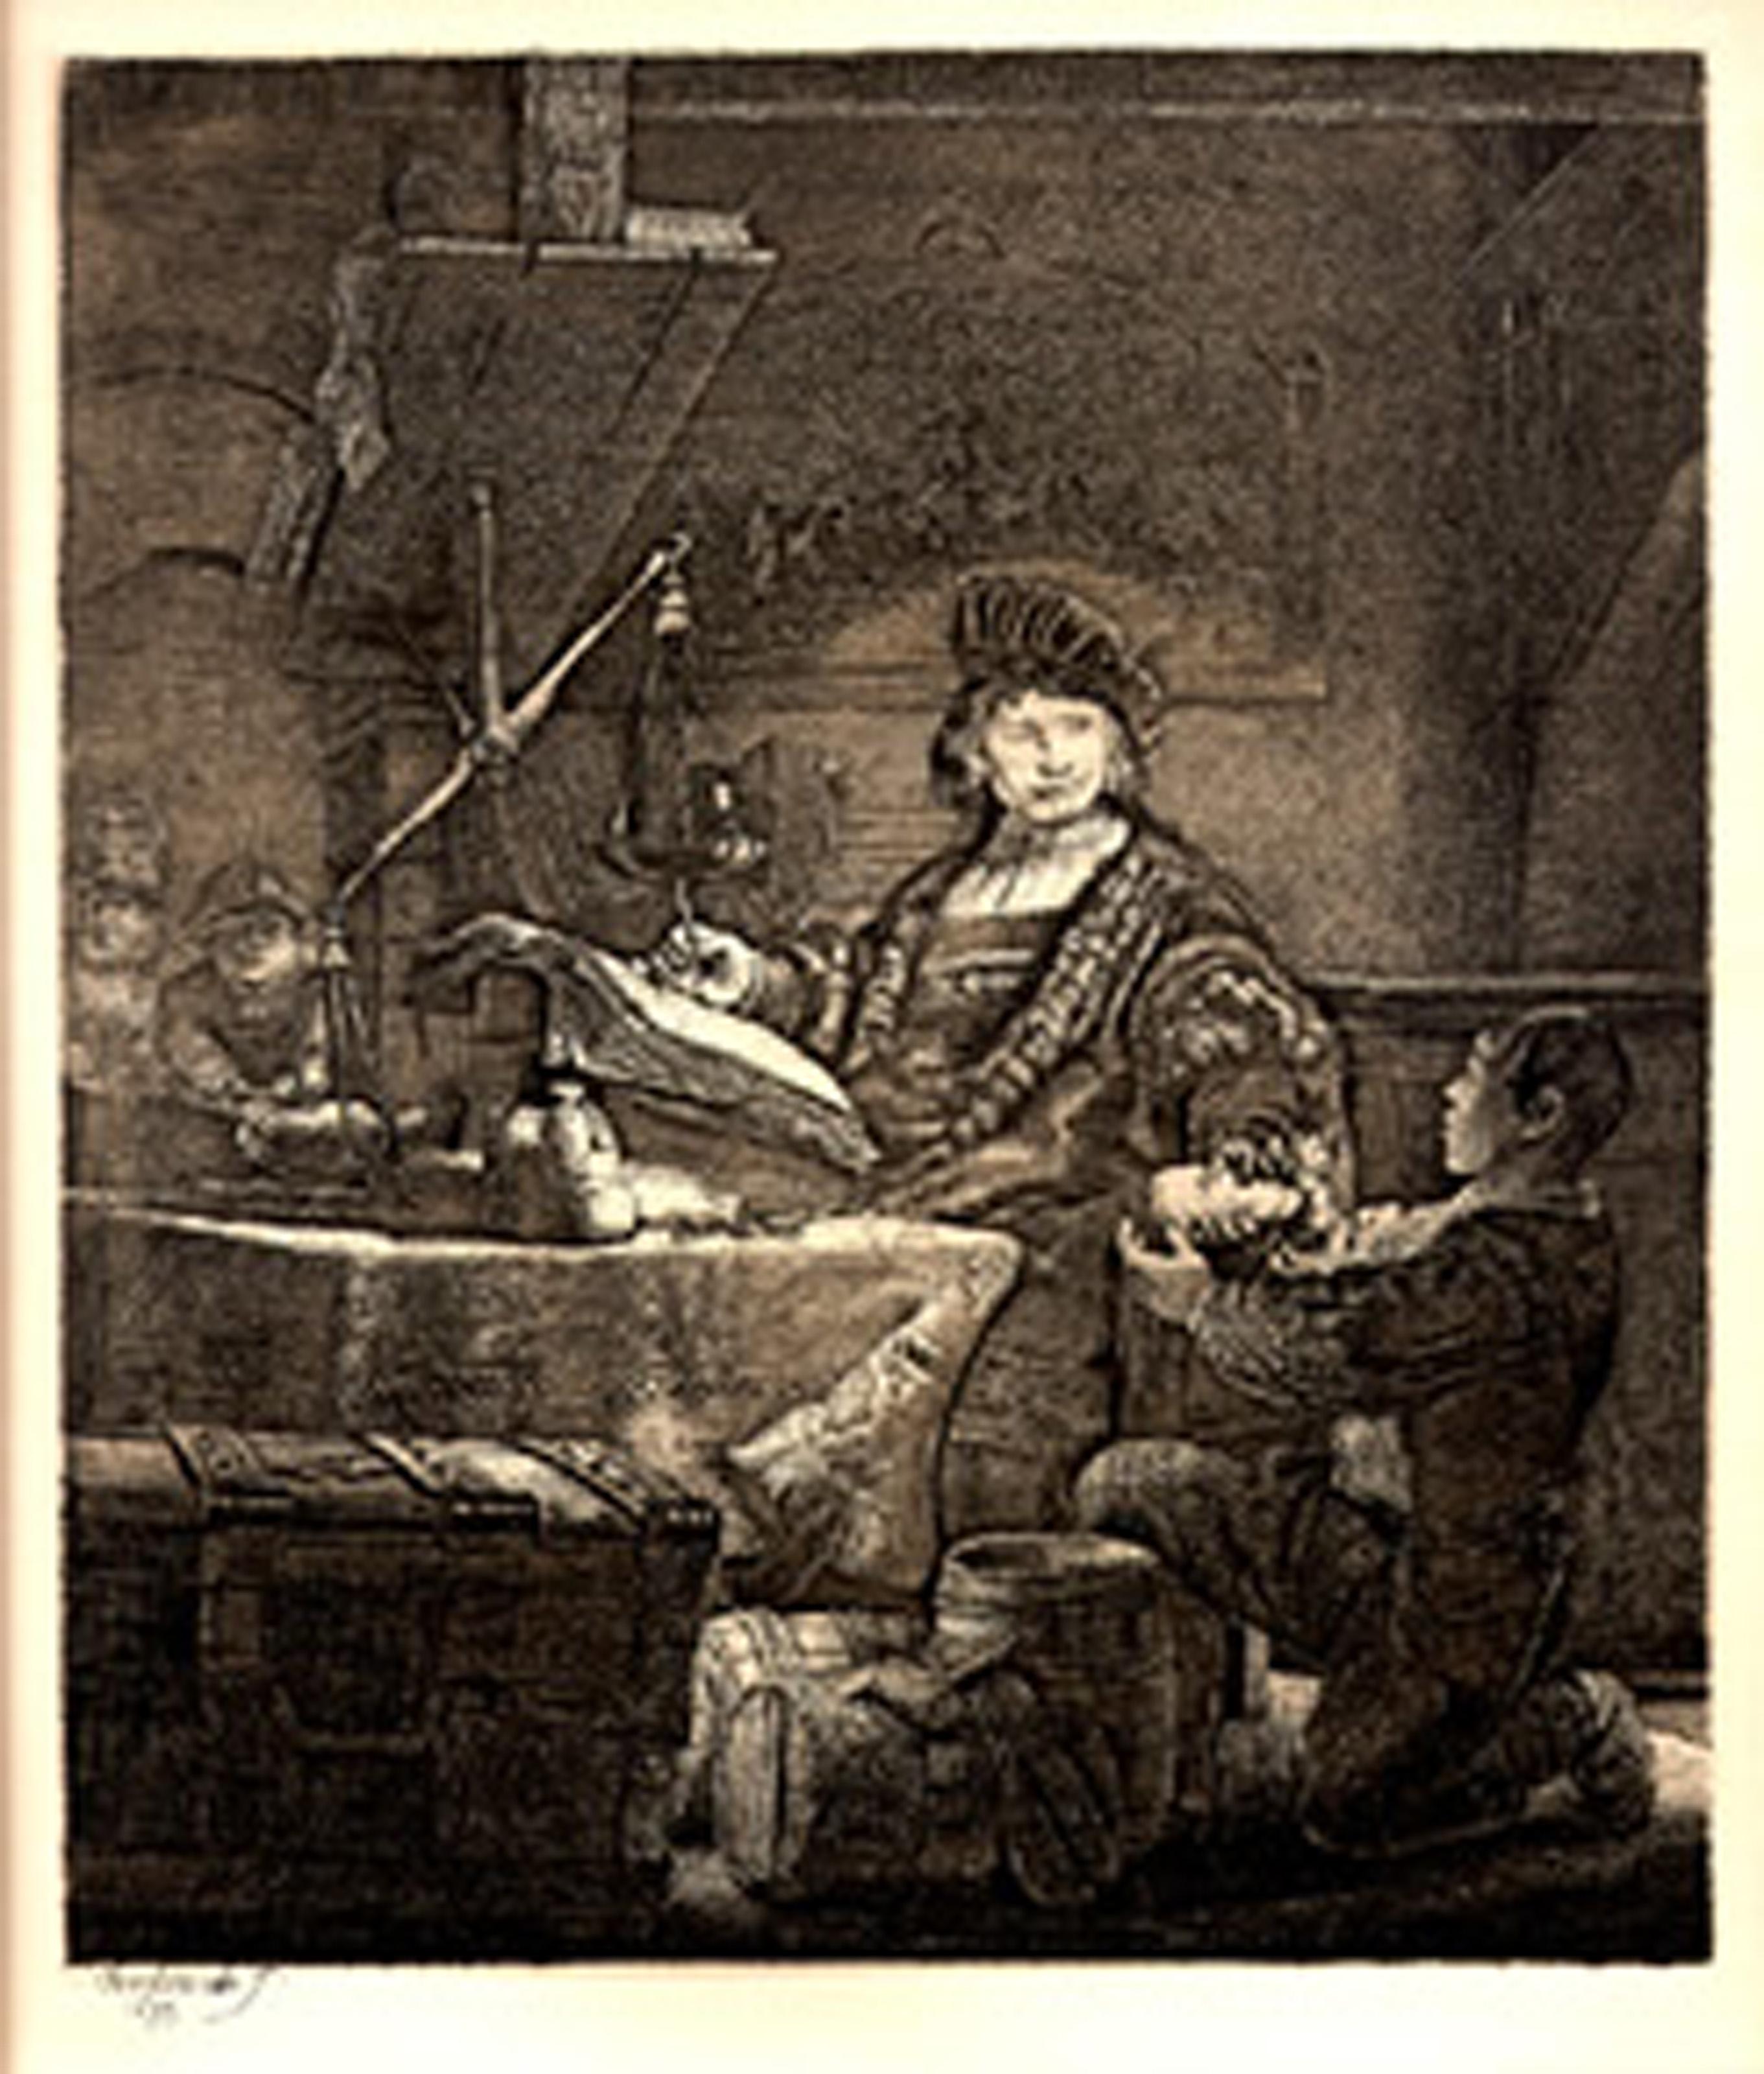  Rembrandt van Rijn, After by Amand Durand, Dutch (1606 - 1669) - Jan Uytenbogaert (1606-84; The Goldweigher), Year: Of Original 1639, Medium: Etching, Image Size: 9.5 x 8 inches, Size: 17.5  x 15 in. (44.45  x 38.1 cm), Printer: Amand Durand,